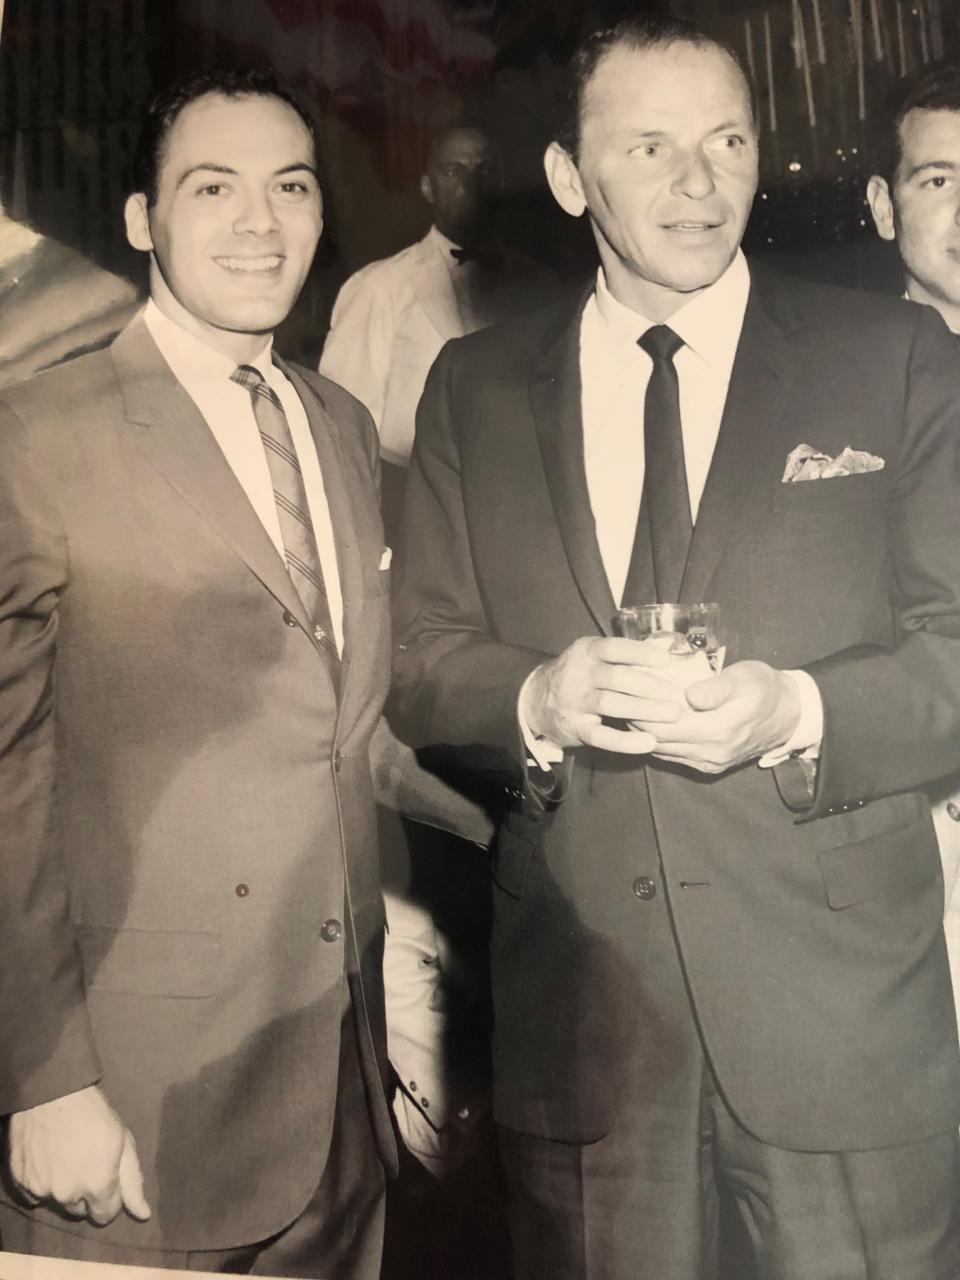 Al Fiori, left, is pictured with Frank Sinatra.